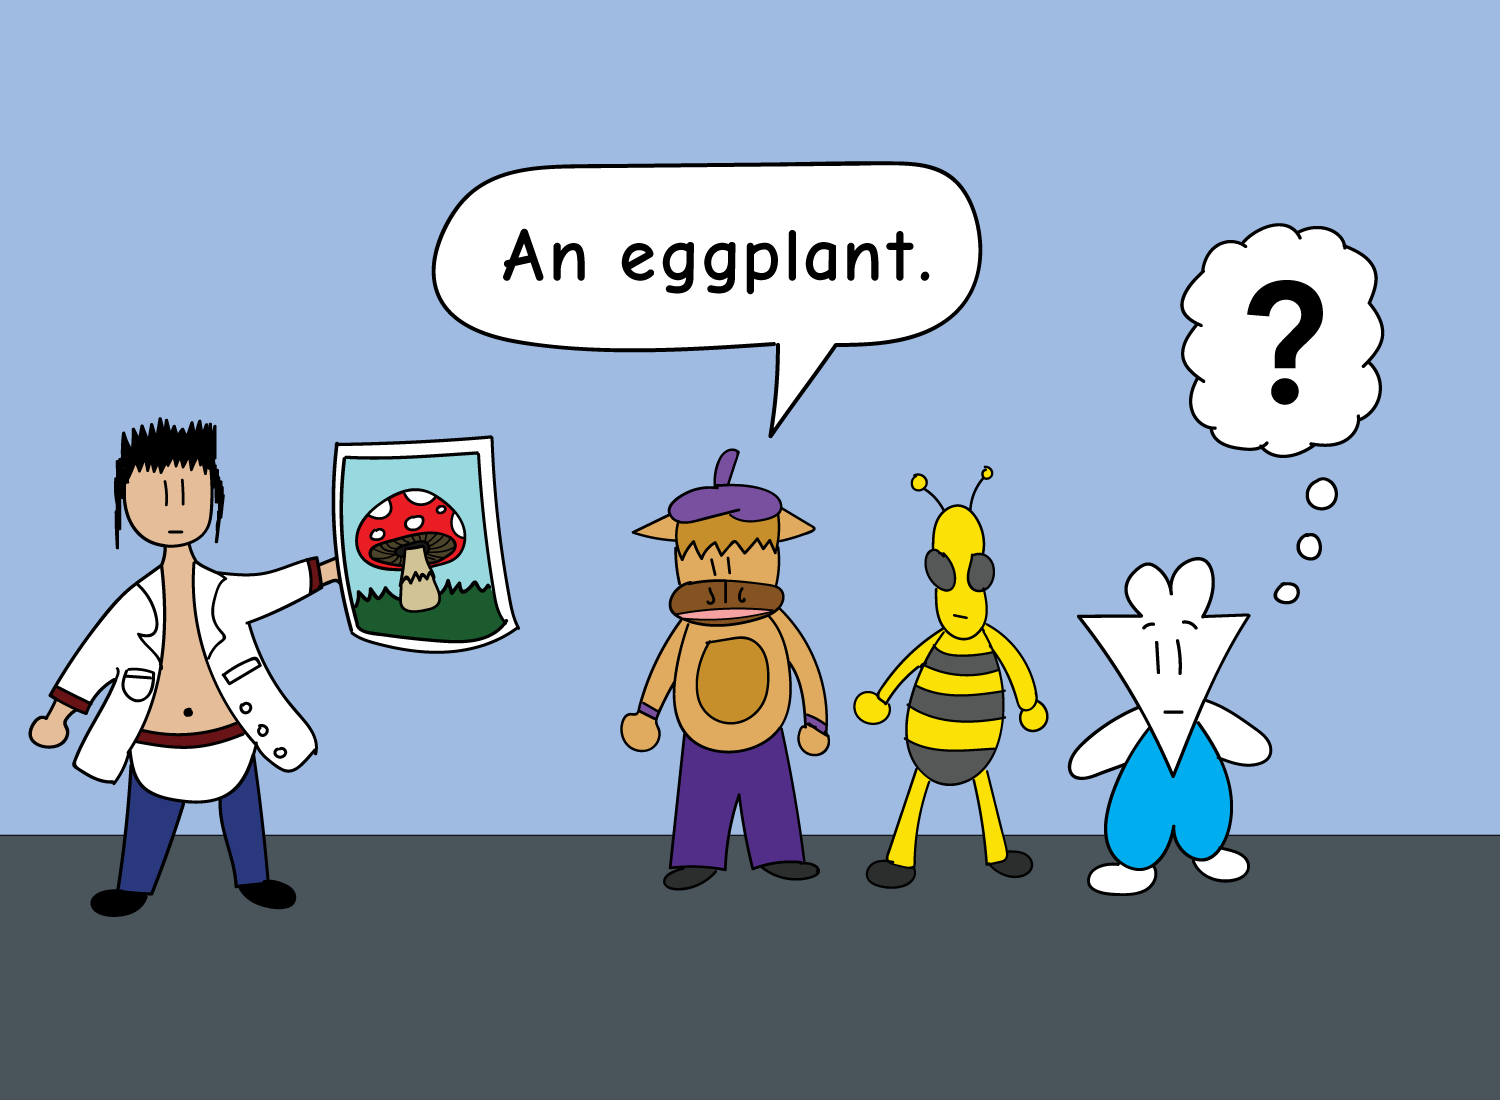 Asch conformity experiment - an eggplant